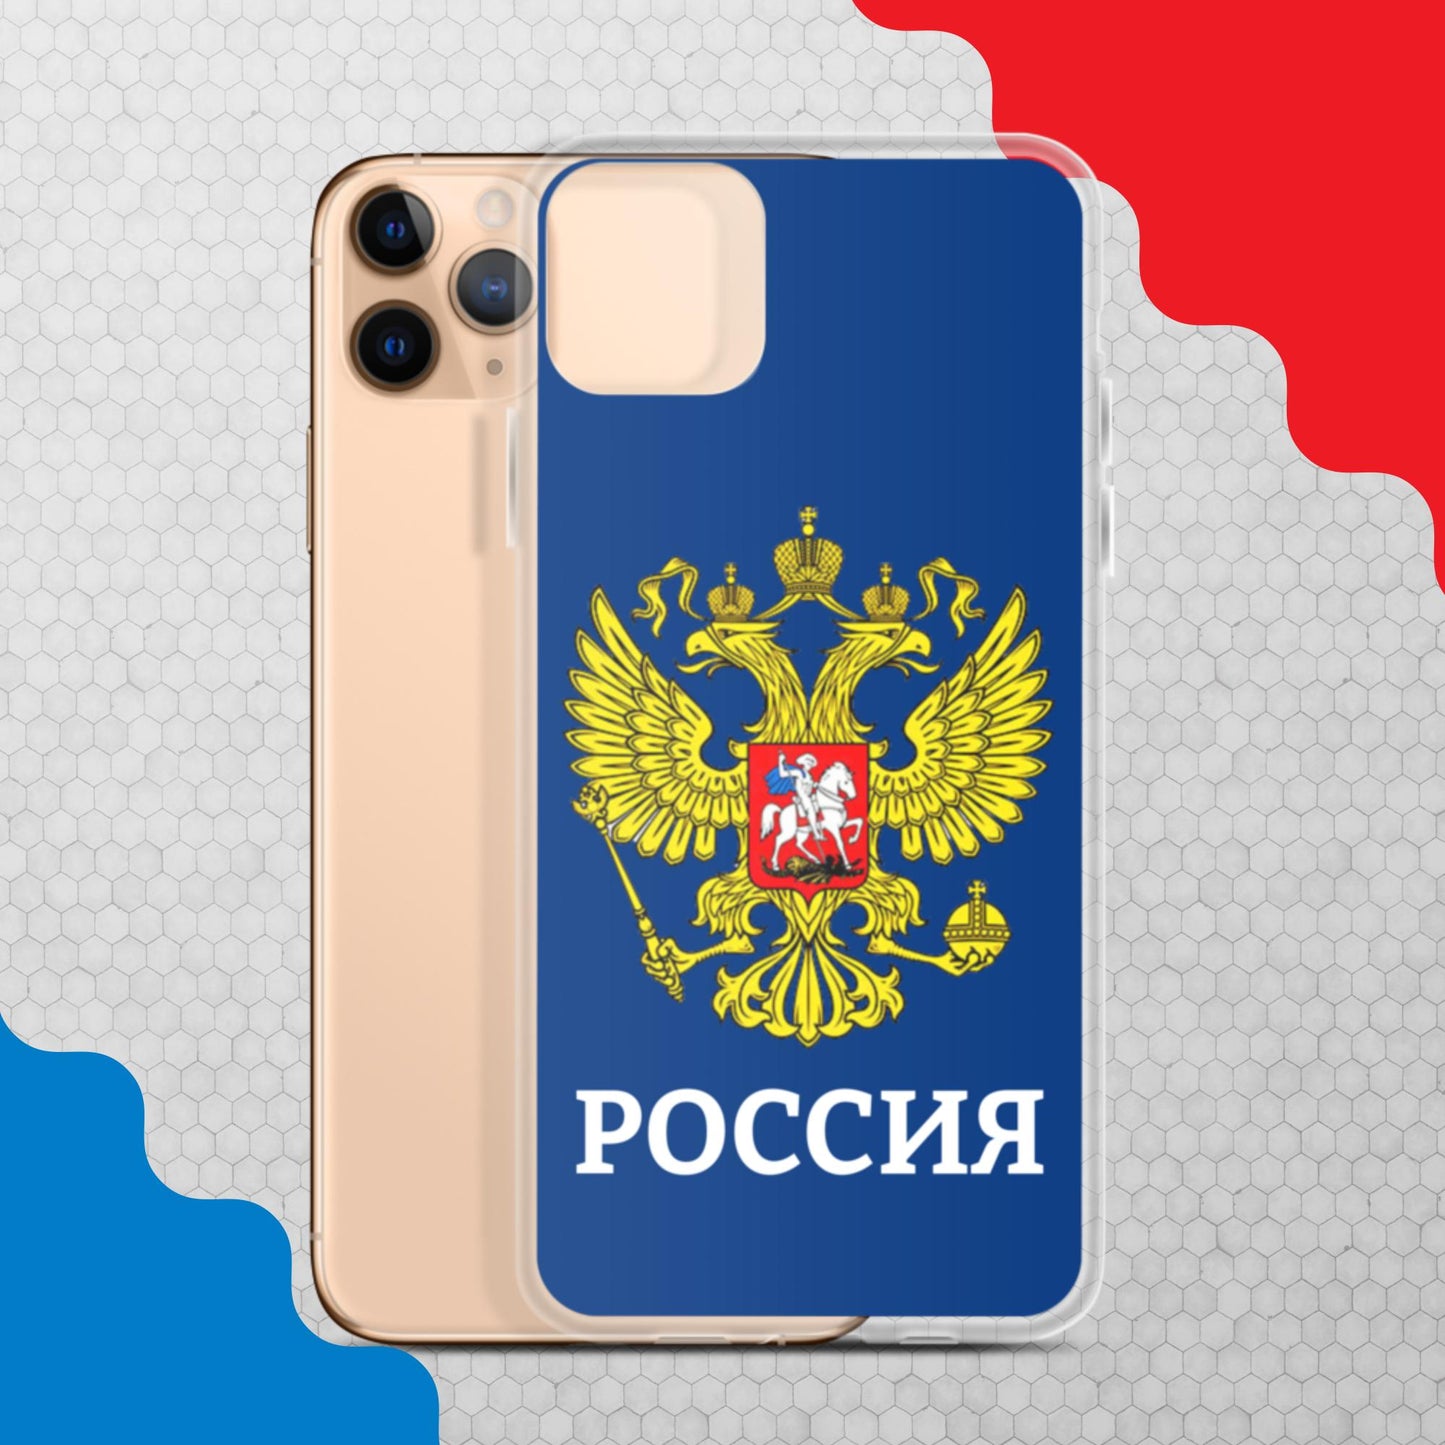 iPhone-Hülle mit Russland-Wappen in blau (alle Modelle)